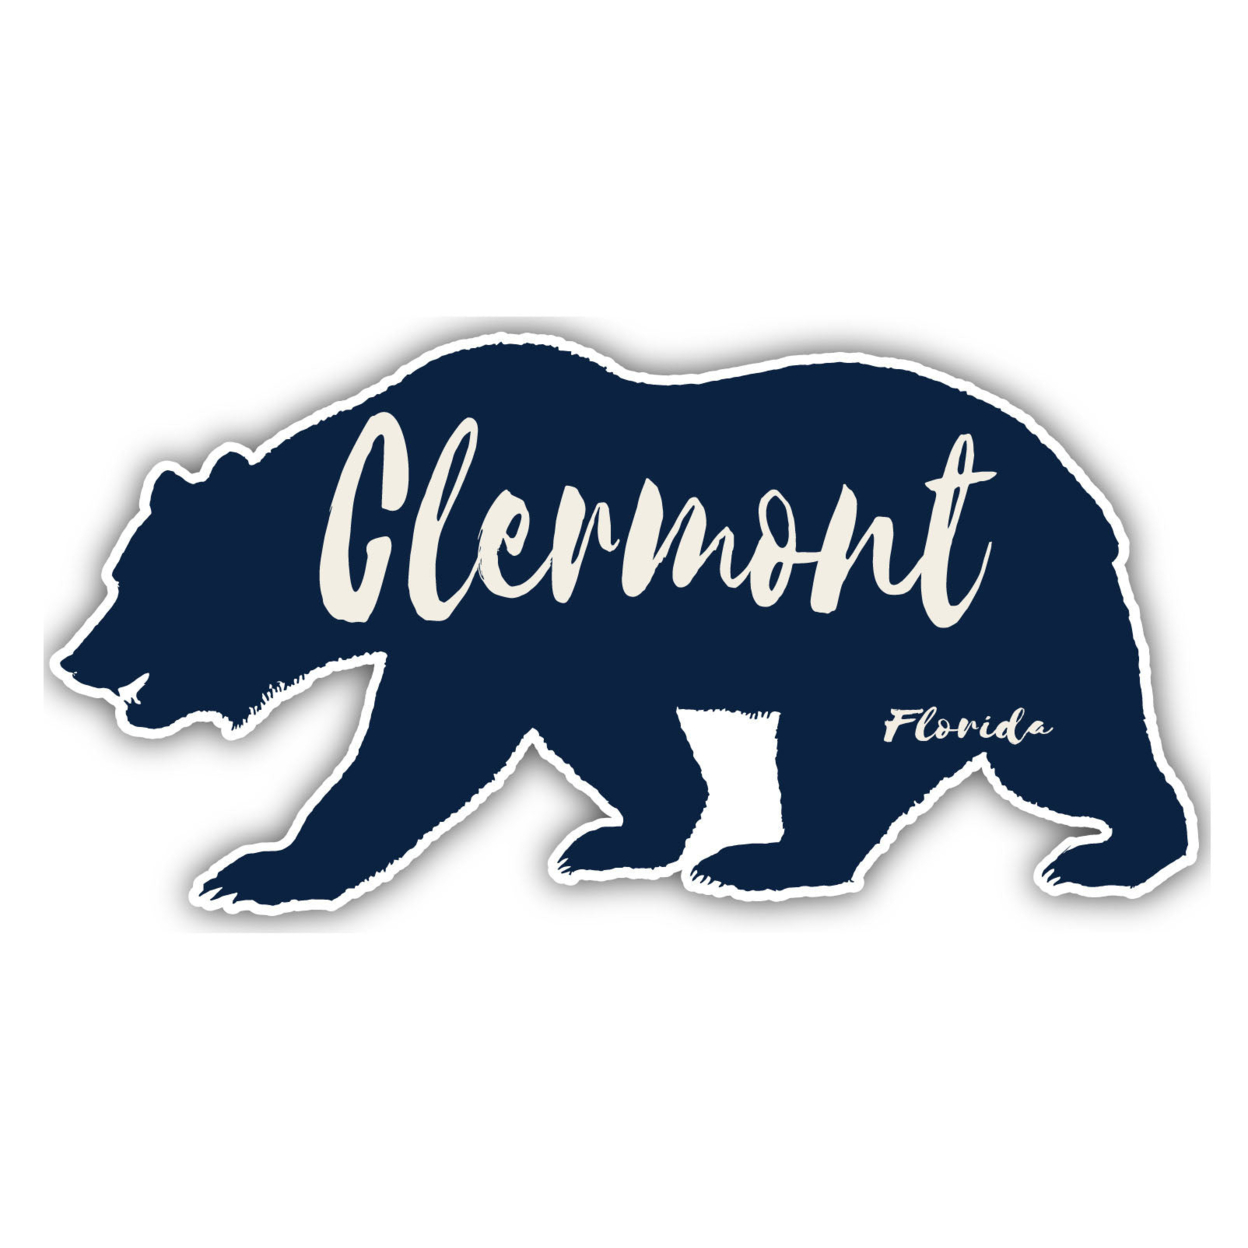 Clermont Florida Souvenir Decorative Stickers (Choose Theme And Size) - Single Unit, 8-Inch, Bear